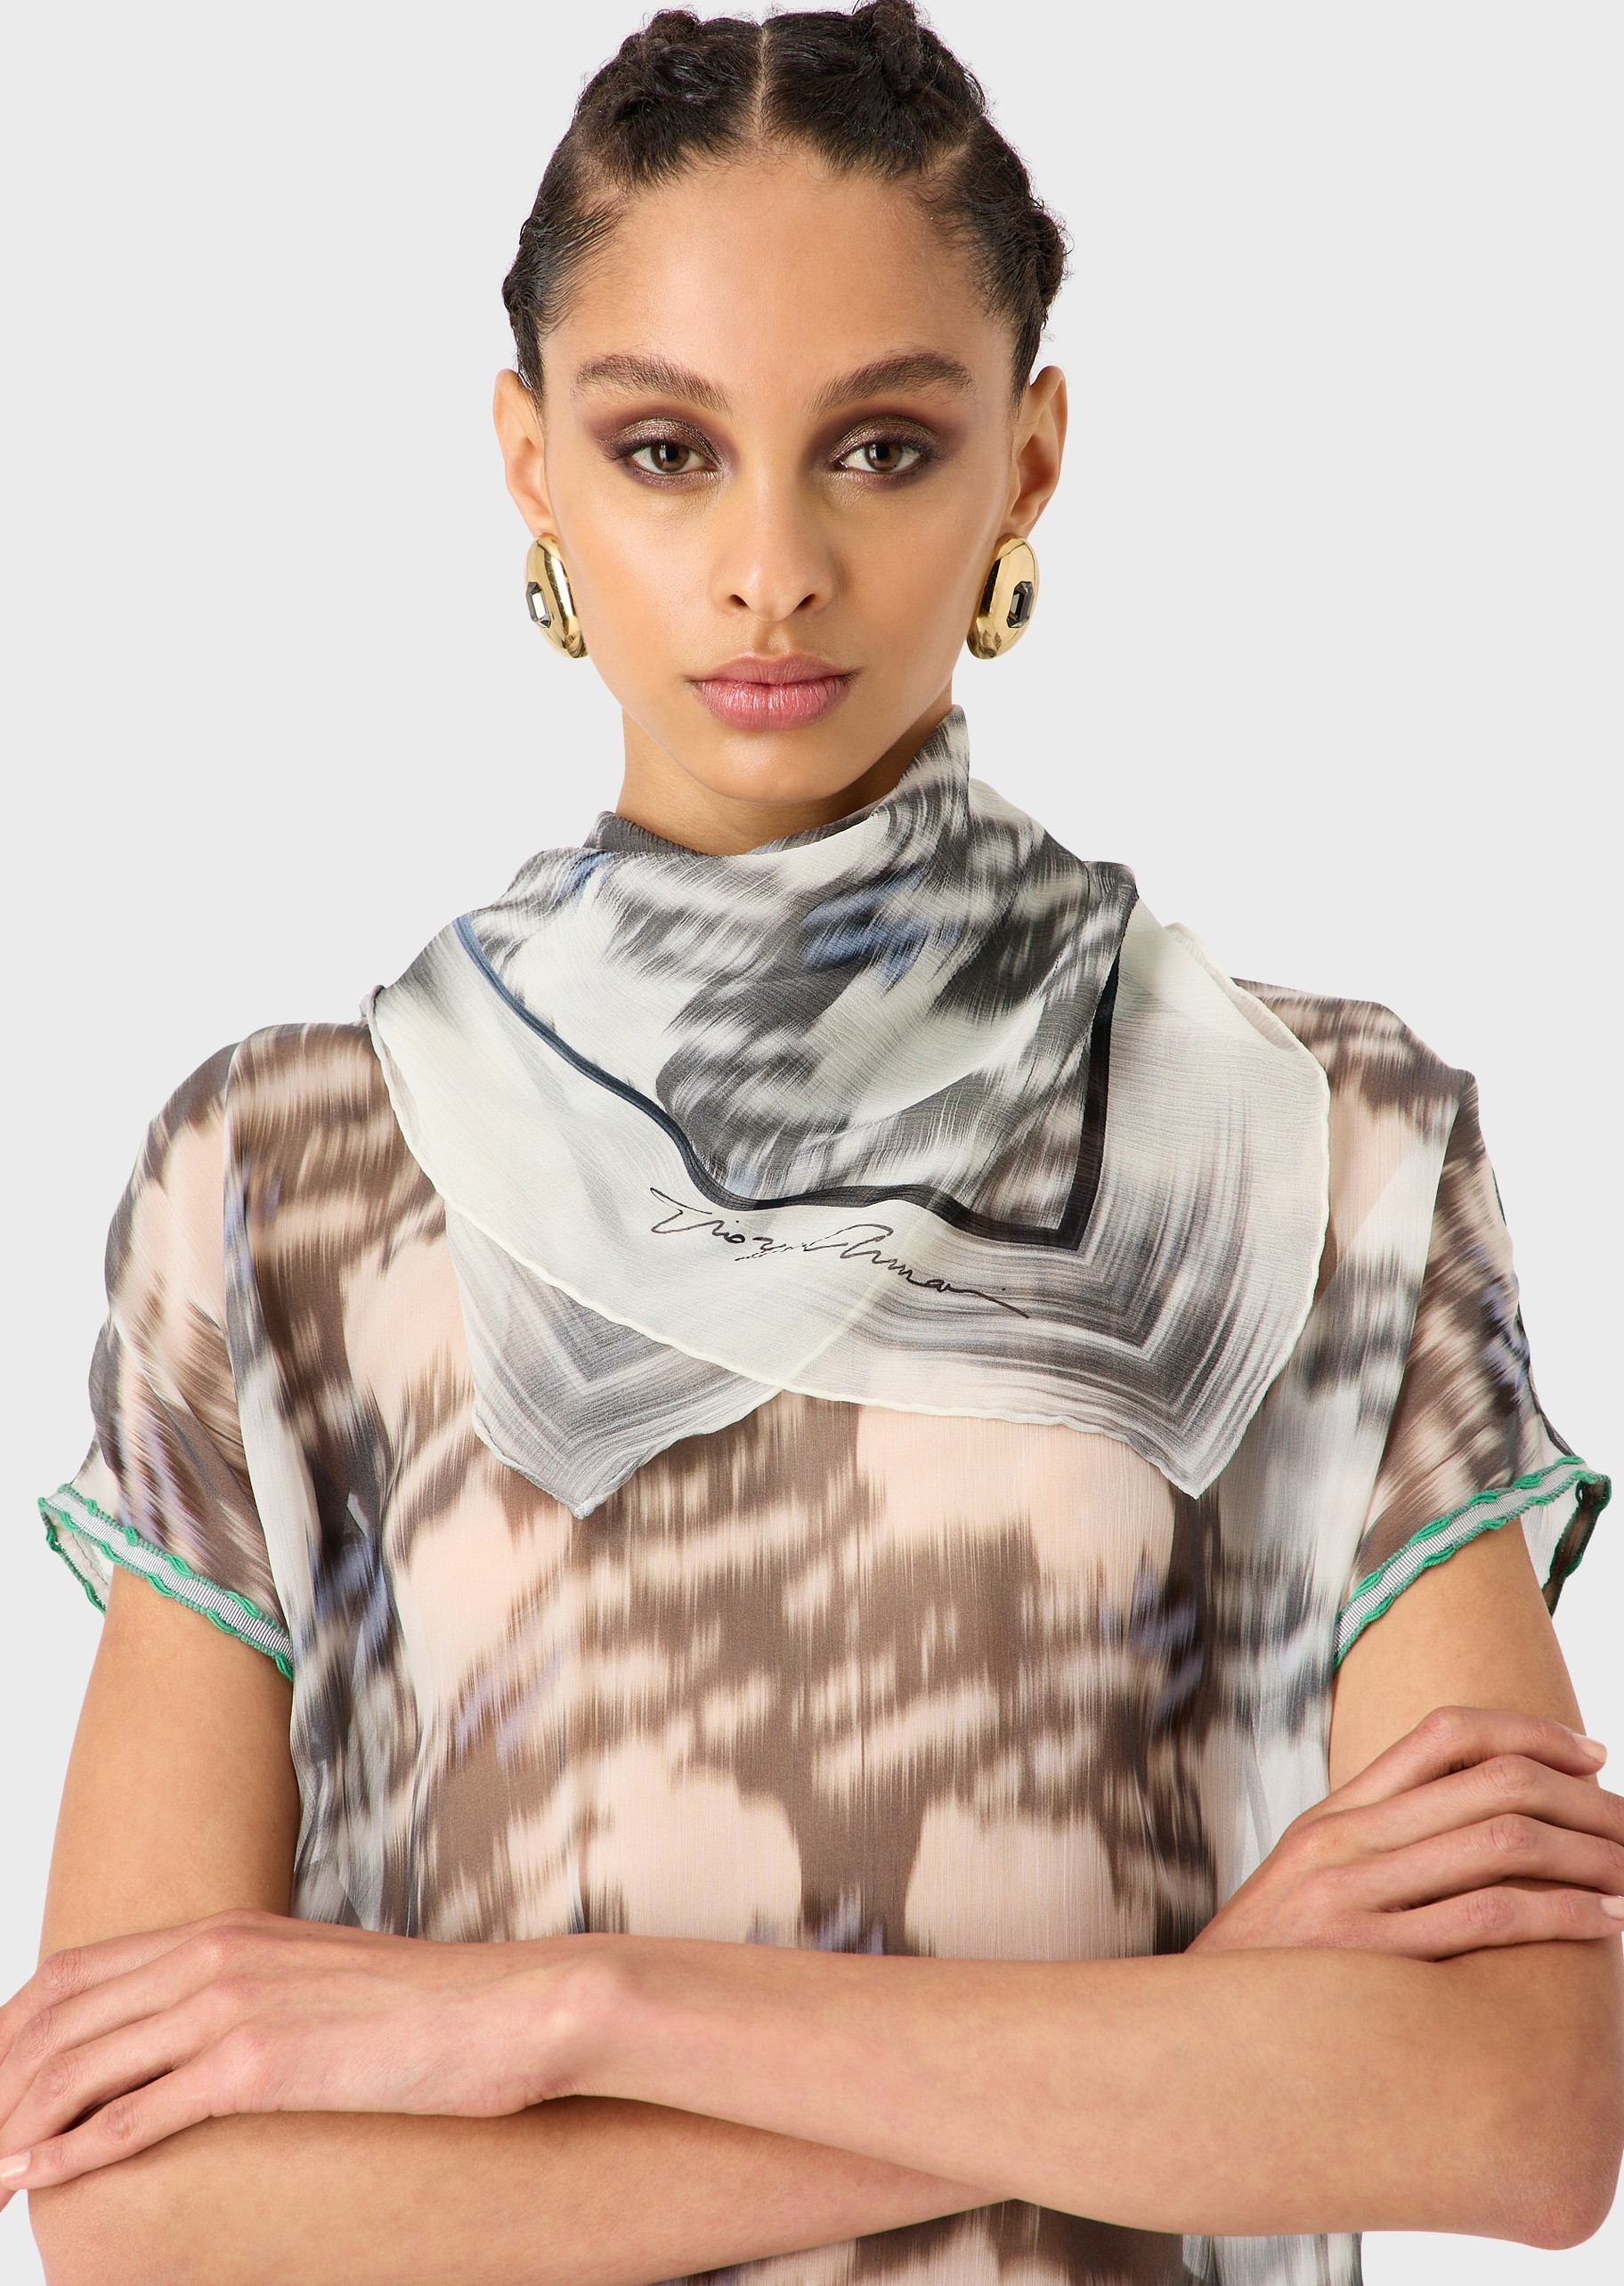 Giorgio Armani 女士桑蚕丝方形优雅简约扎染印花围巾